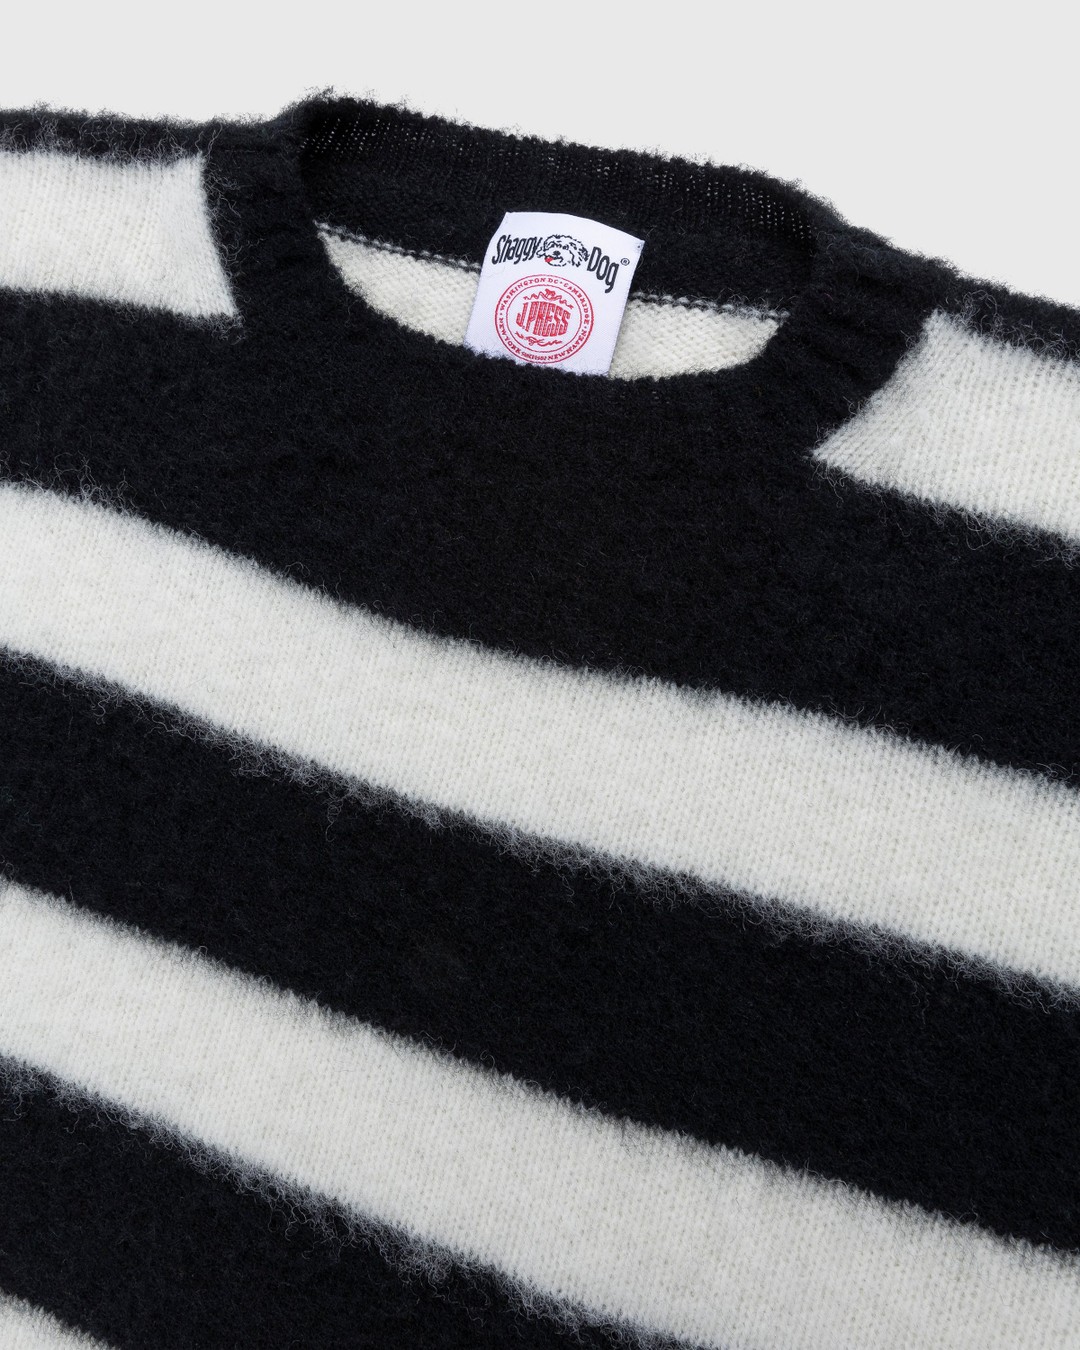 J. Press x Highsnobiety – Shaggy Dog Stripe Sweater Black/Cream - Crewnecks - Multi - Image 3